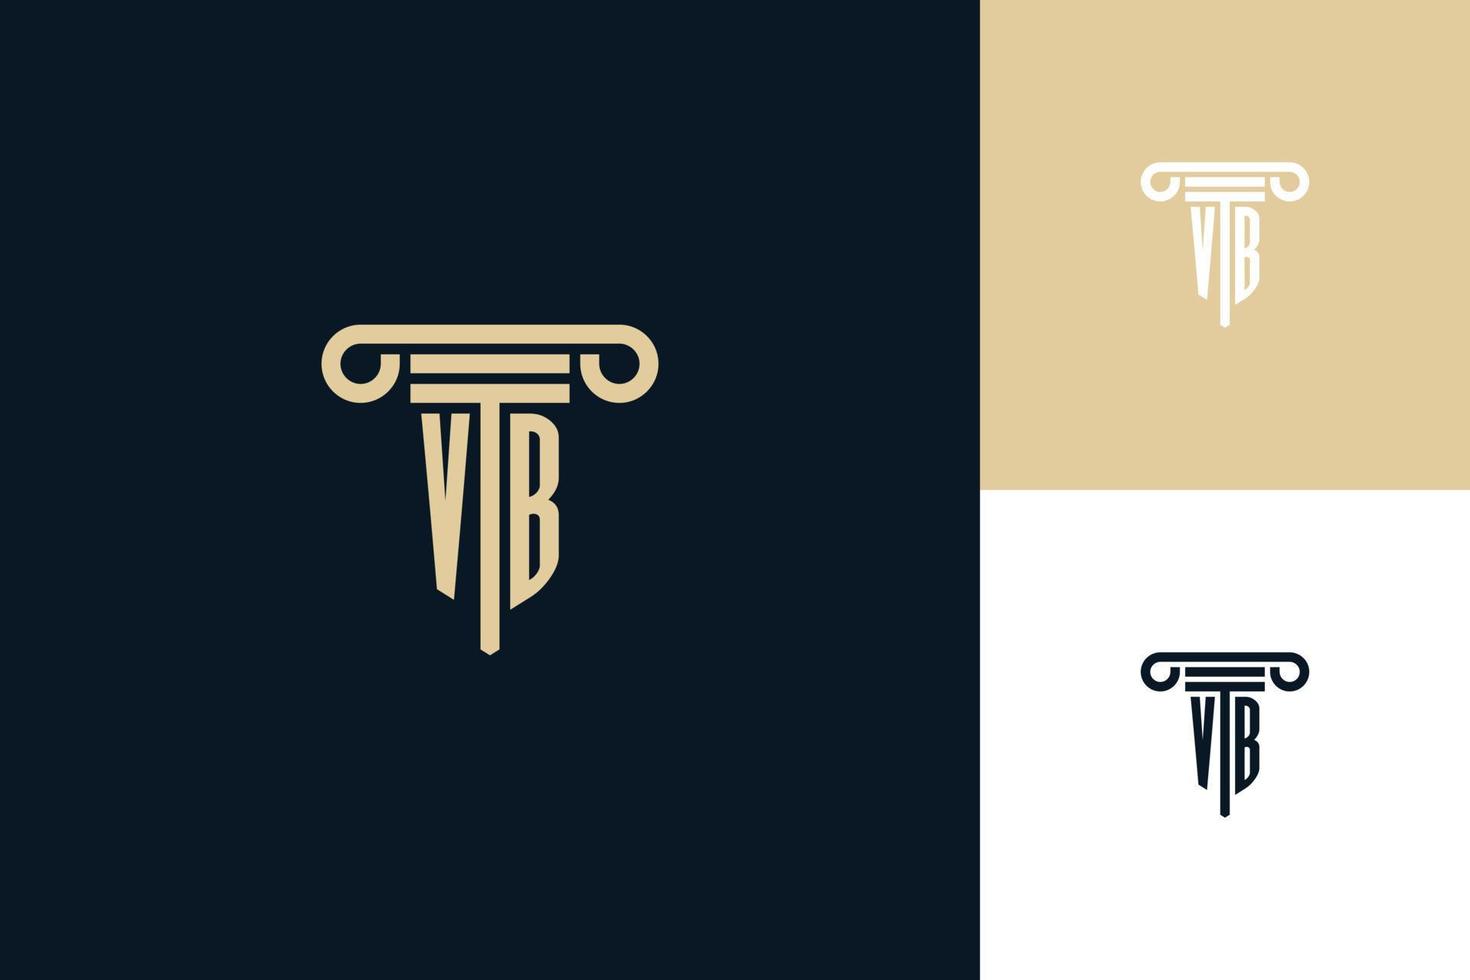 vb monogram initialer design logotyp. advokatlogotypdesignidéer vektor